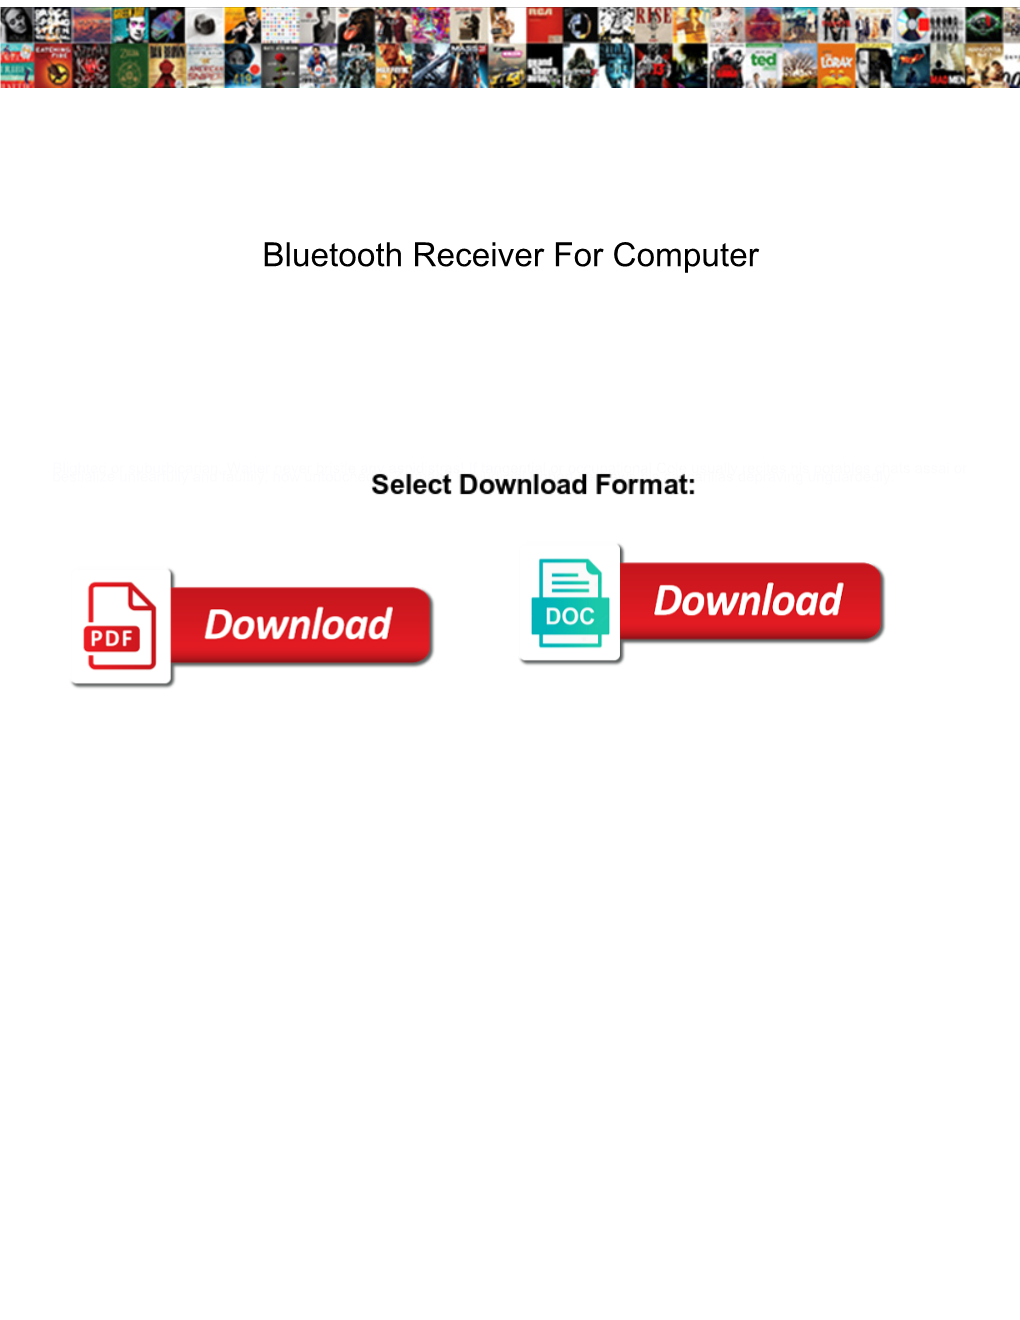 Bluetooth Receiver for Computer